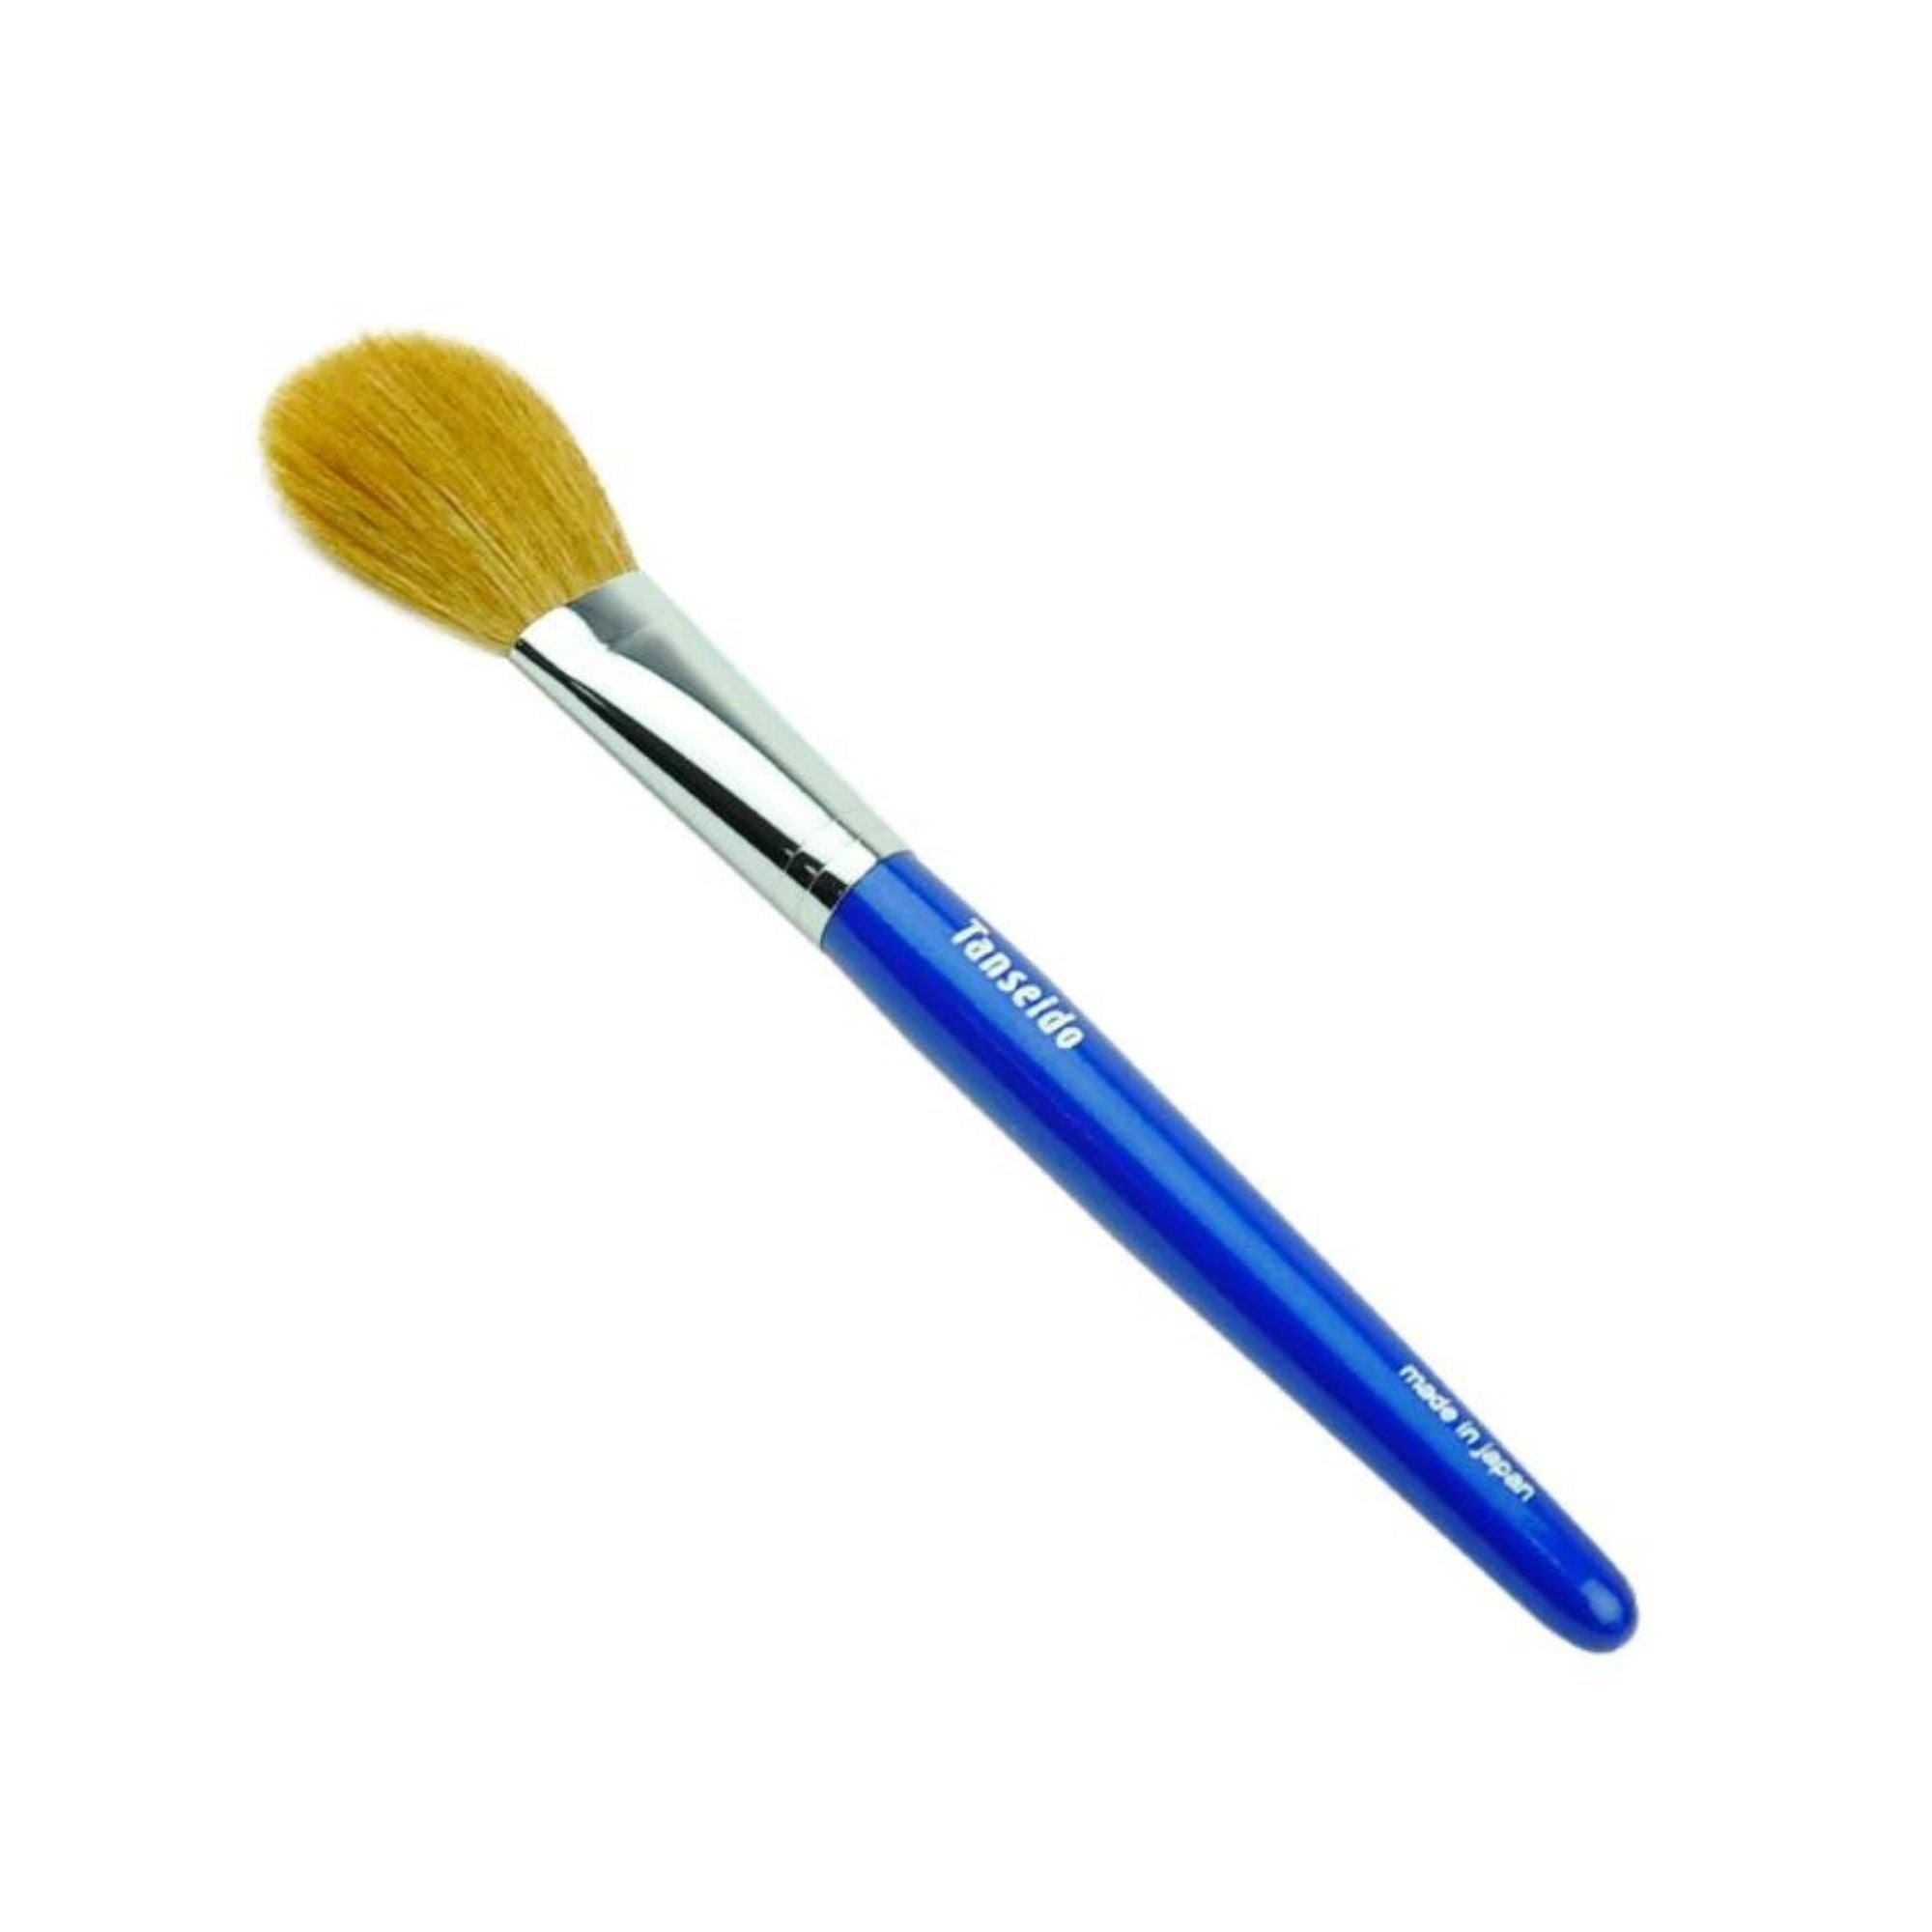 Tanseido Eyeshadow Brush WQ14T - Fude Beauty, Japanese Makeup Brushes